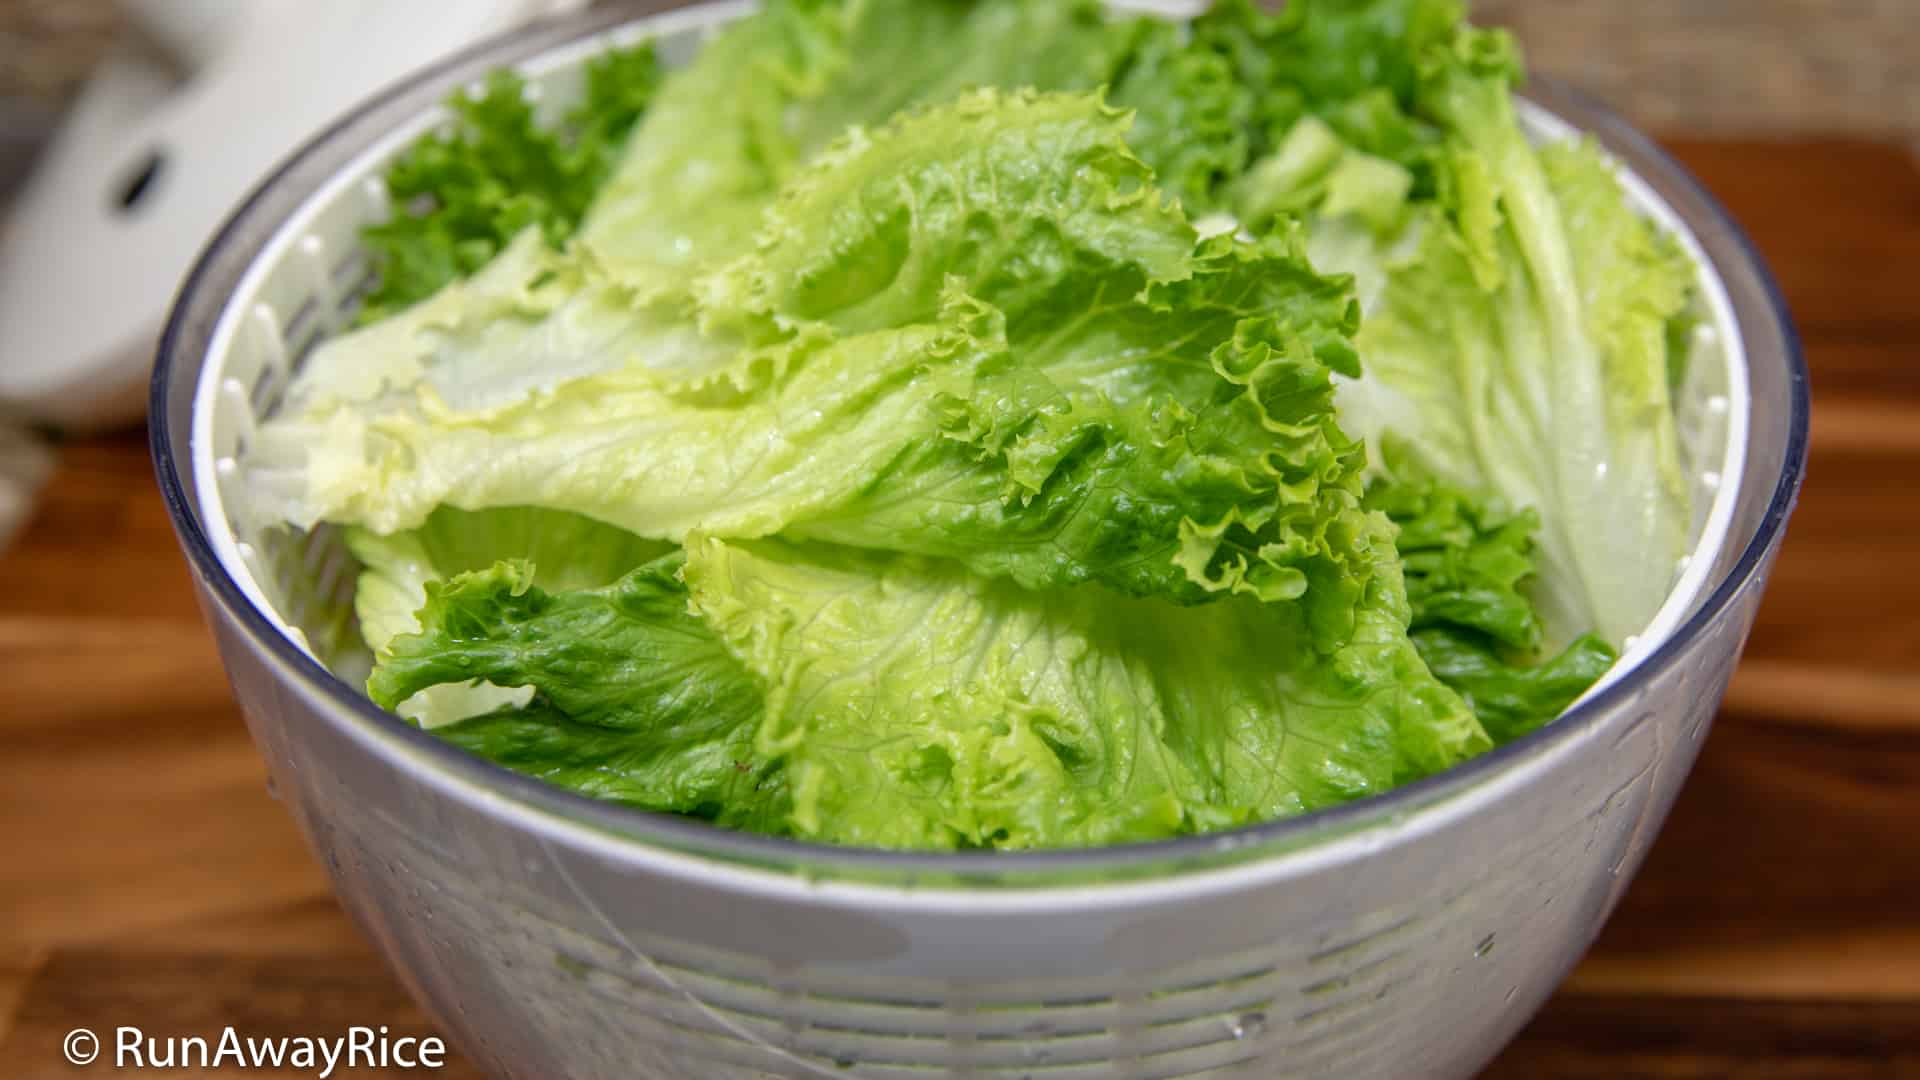 http://runawayrice.com/wp-content/uploads/2018/07/Salad-Spinner-Lettuce.jpg